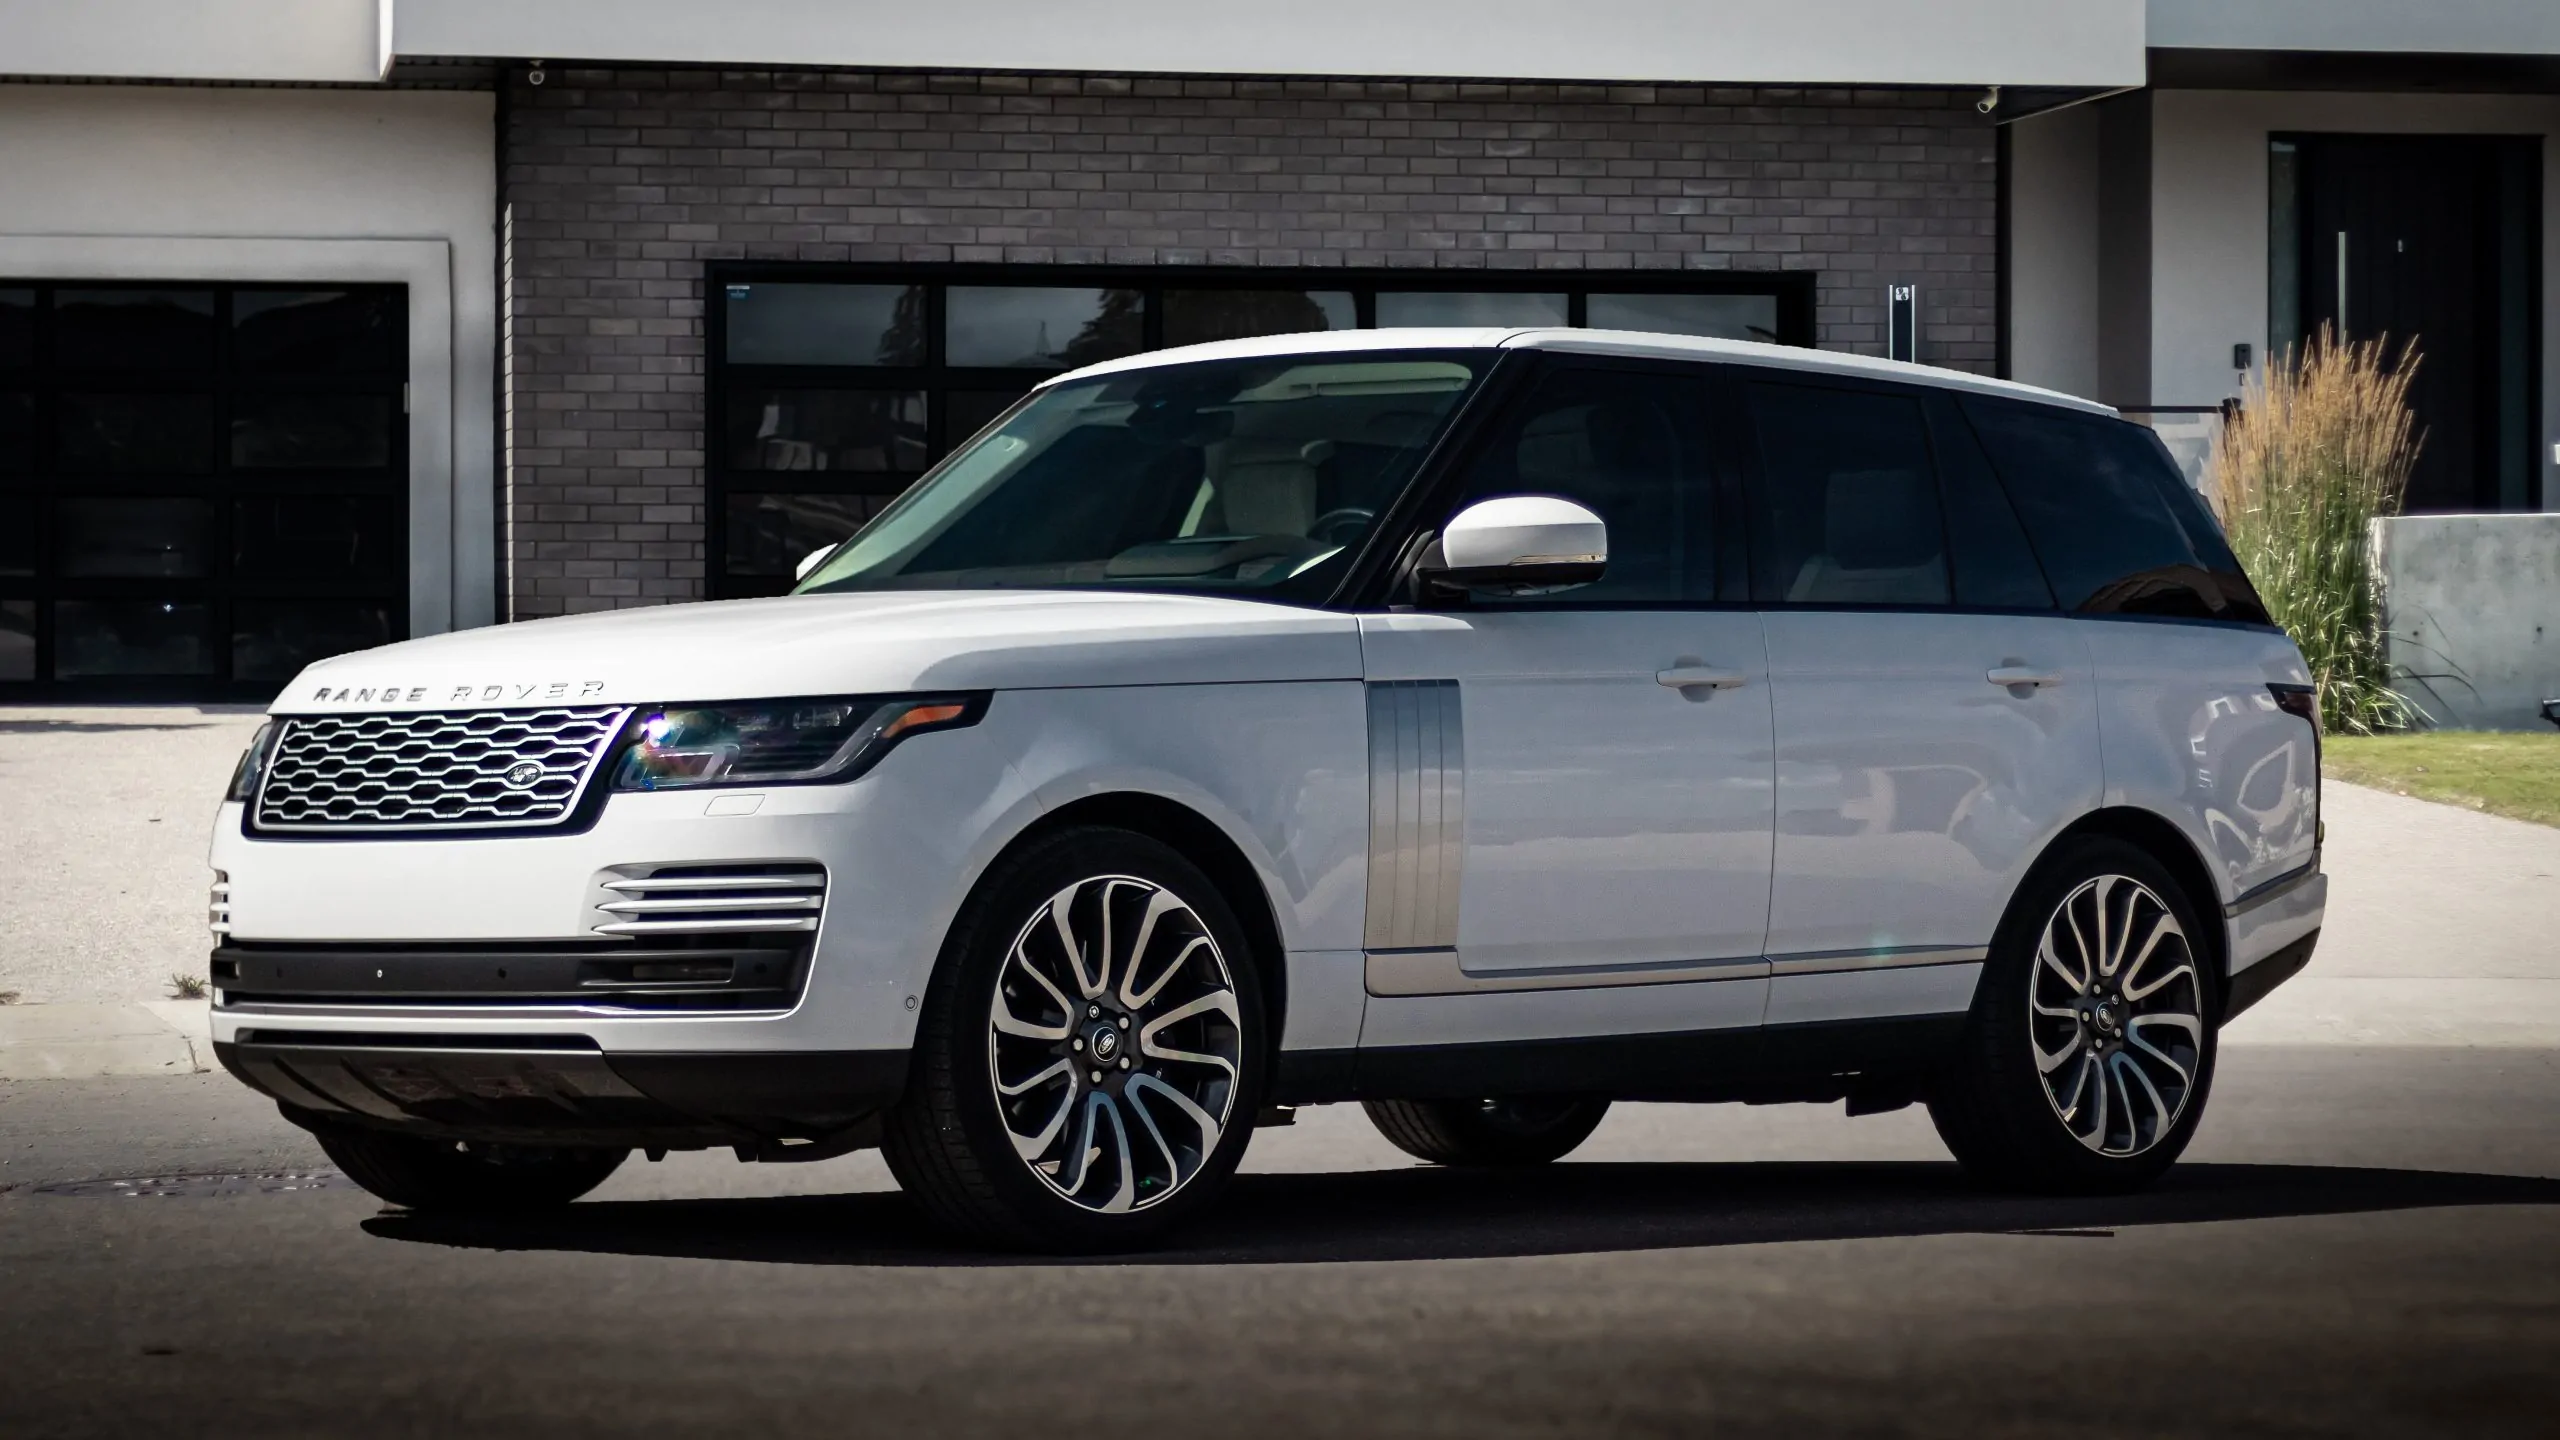 Range Rover Luxury Car Rentals in Edmonton